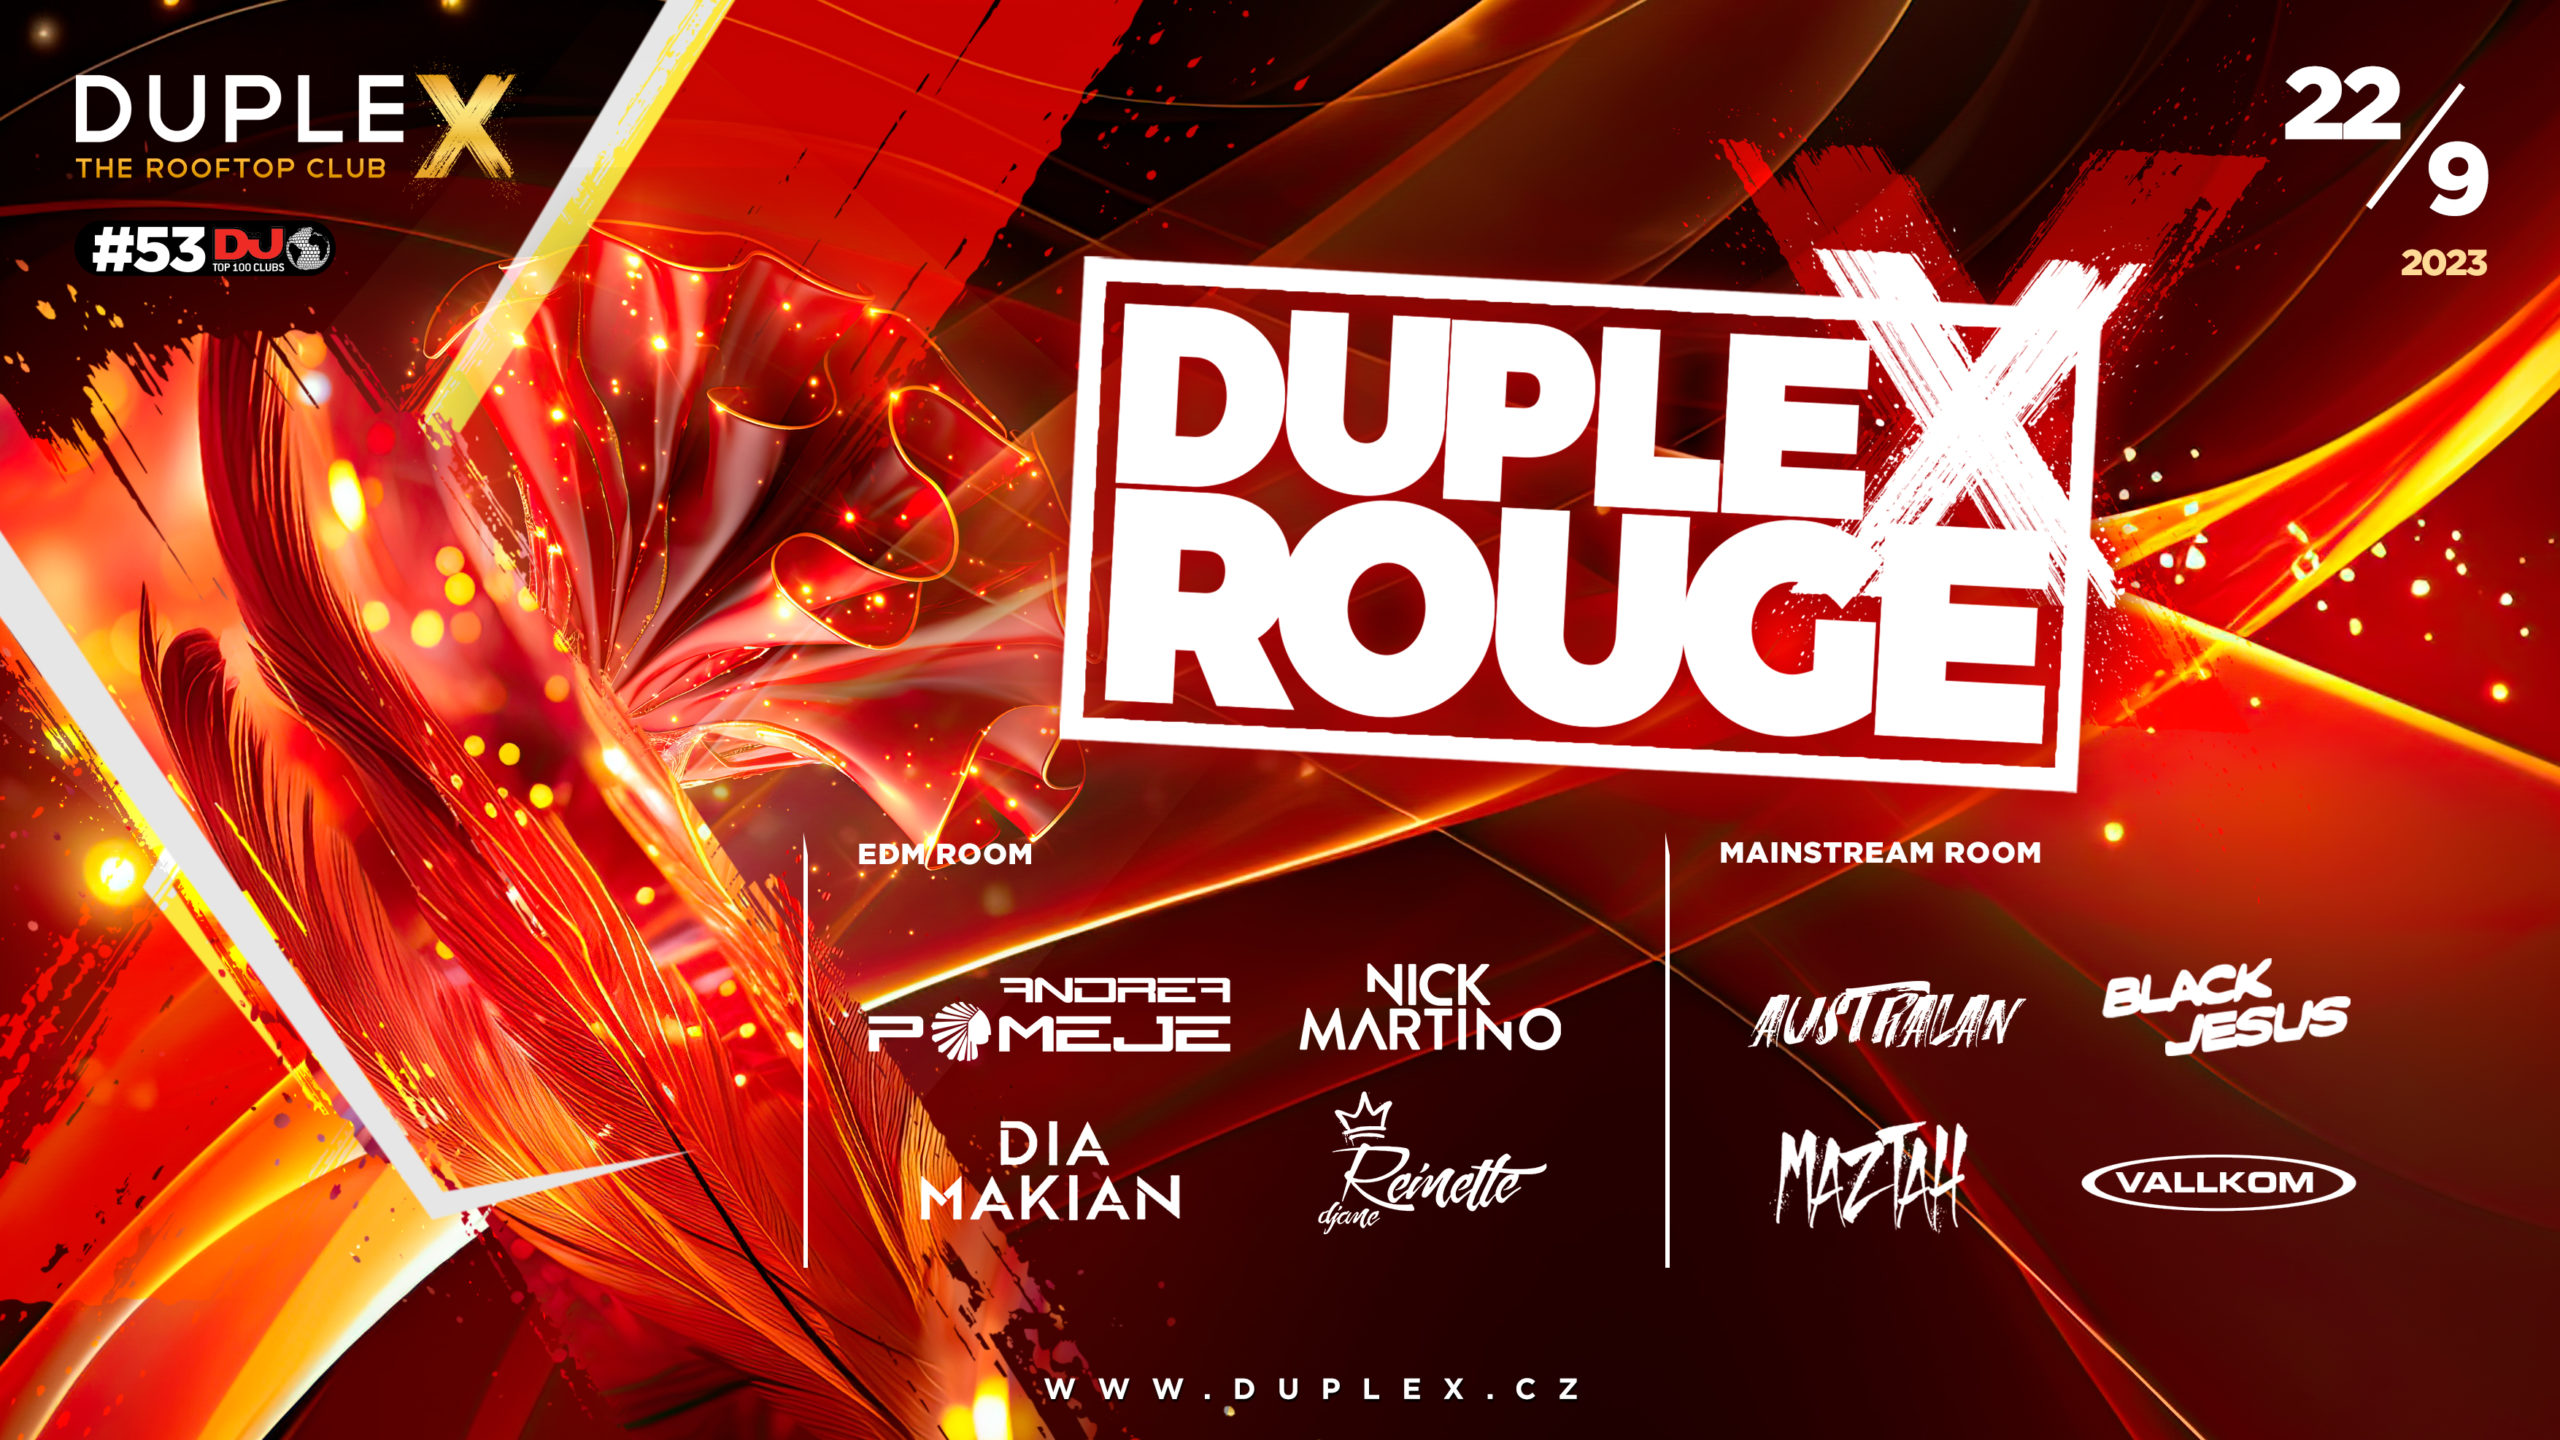 DupleX Rouge - Friday Party at Duplex Prague